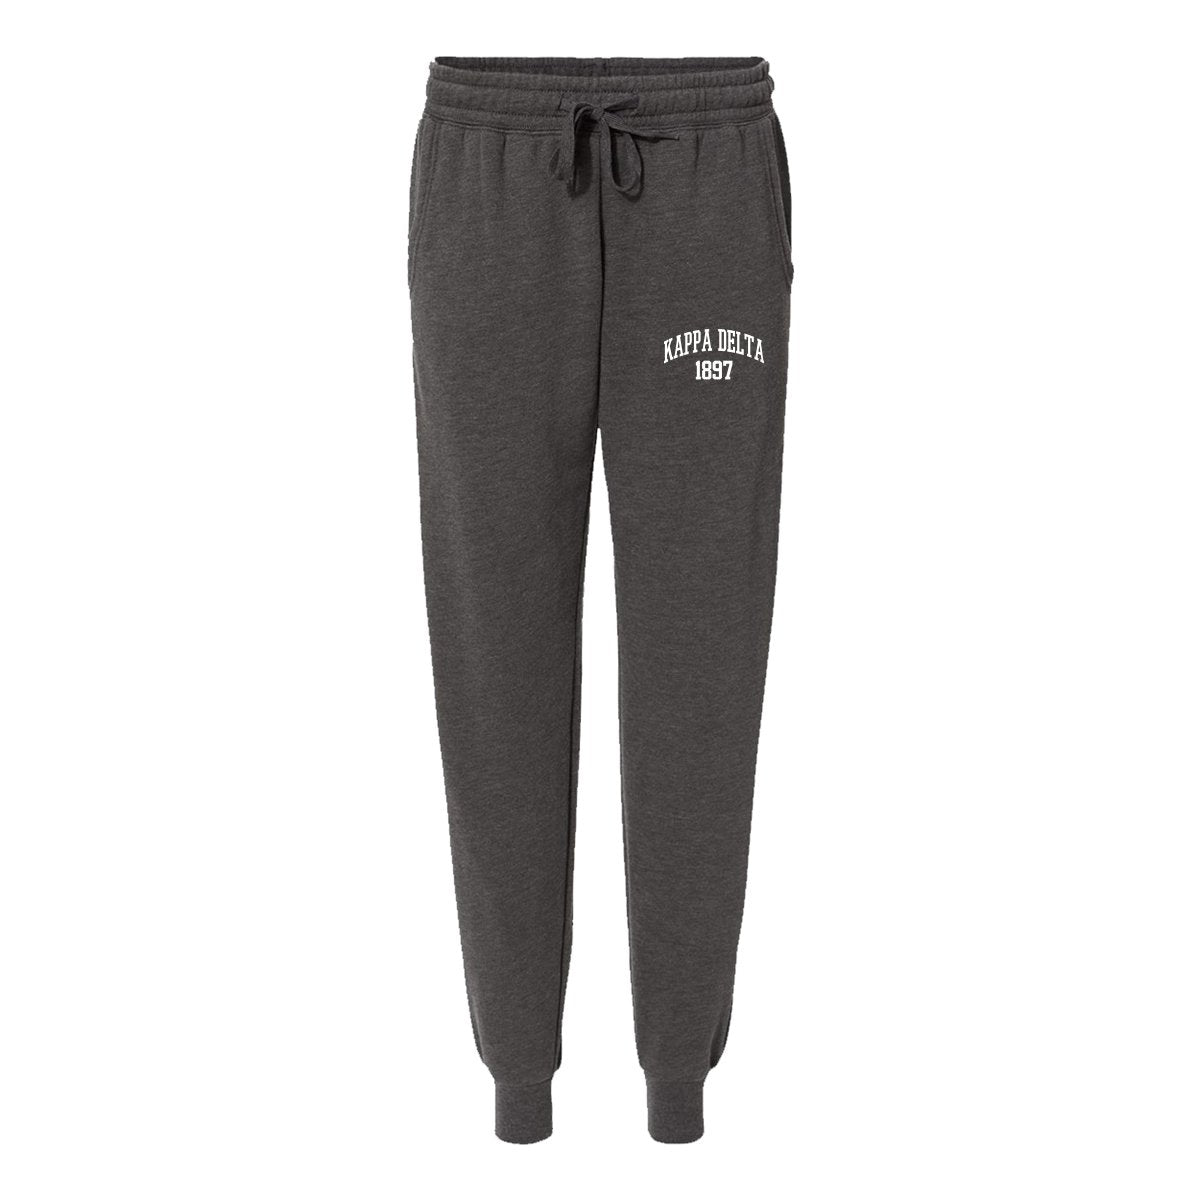 Kappa Delta Embroidered Collegiate Joggers | Kappa Delta | Pants > Sweatpants